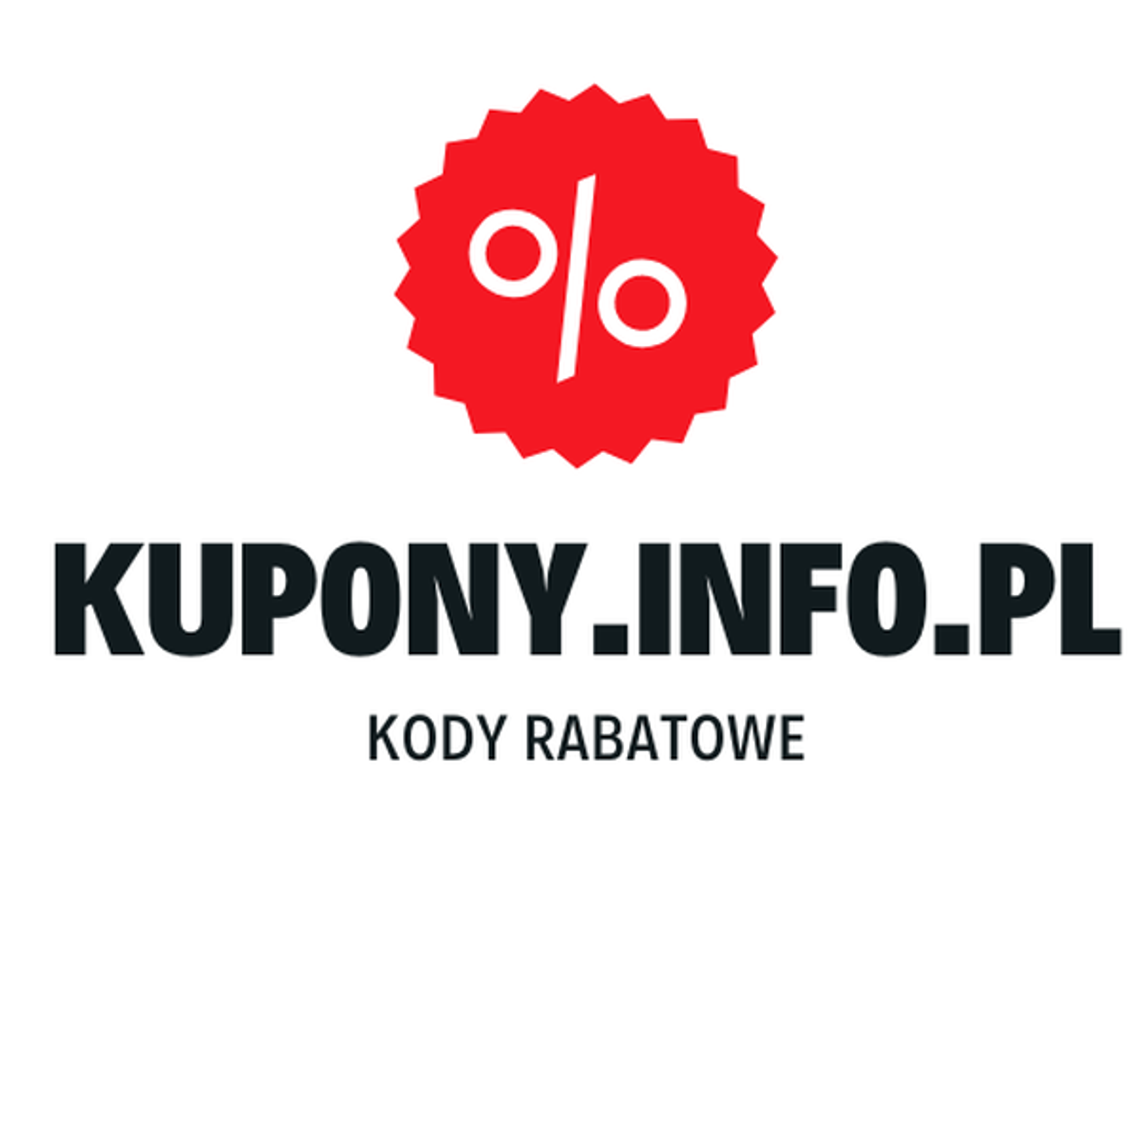 Kupony.info.pl kody rabatowe